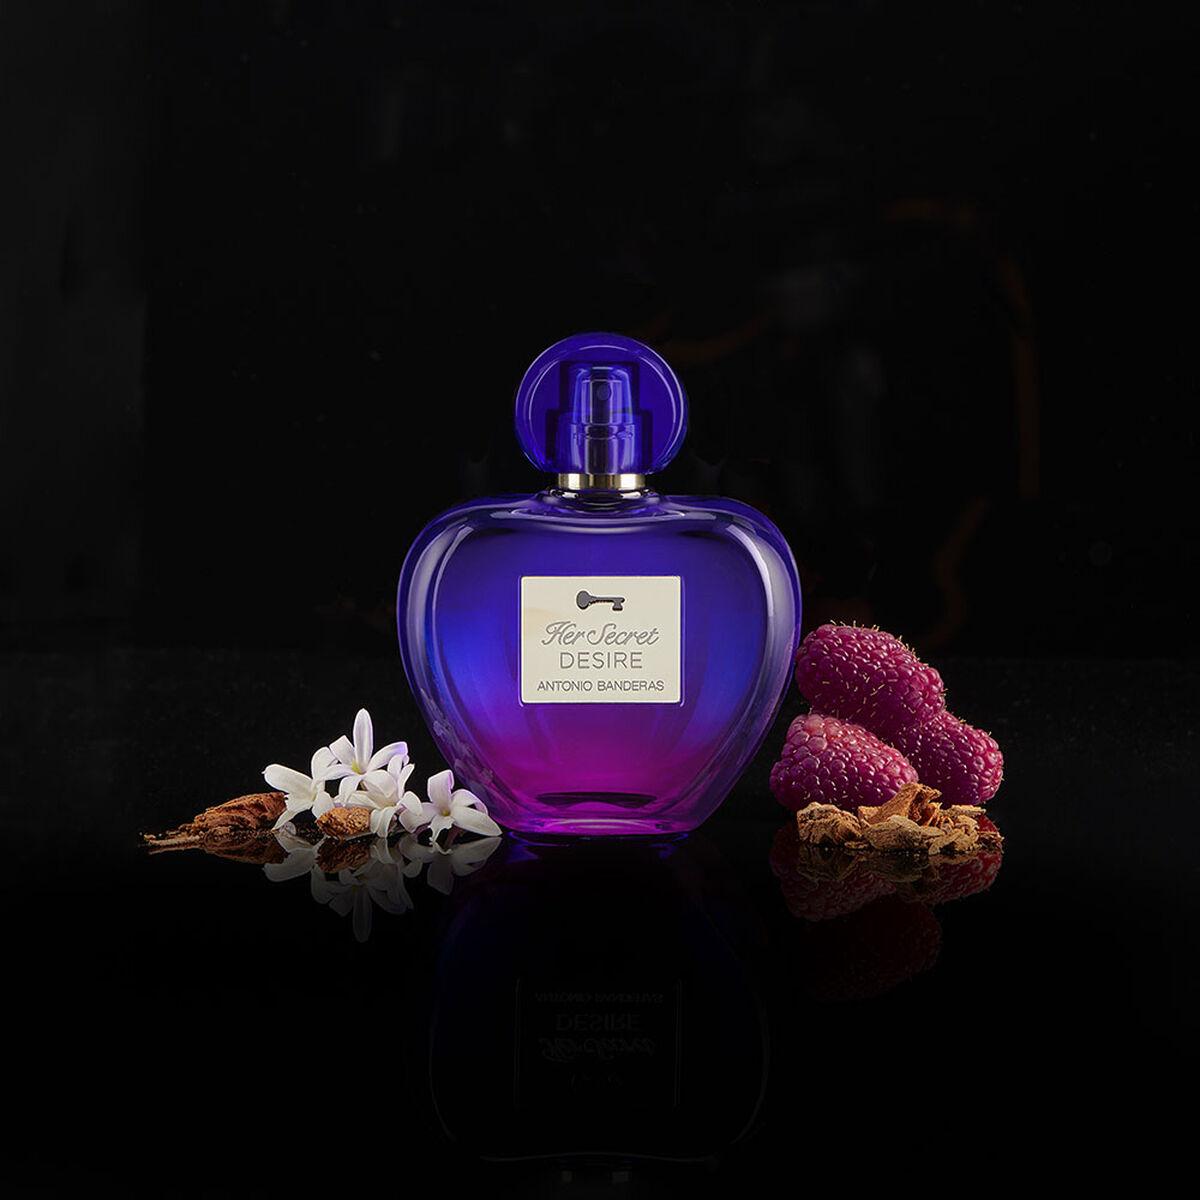 Perfume Antonio Banderas Her Secret Desire EDT 80 ml